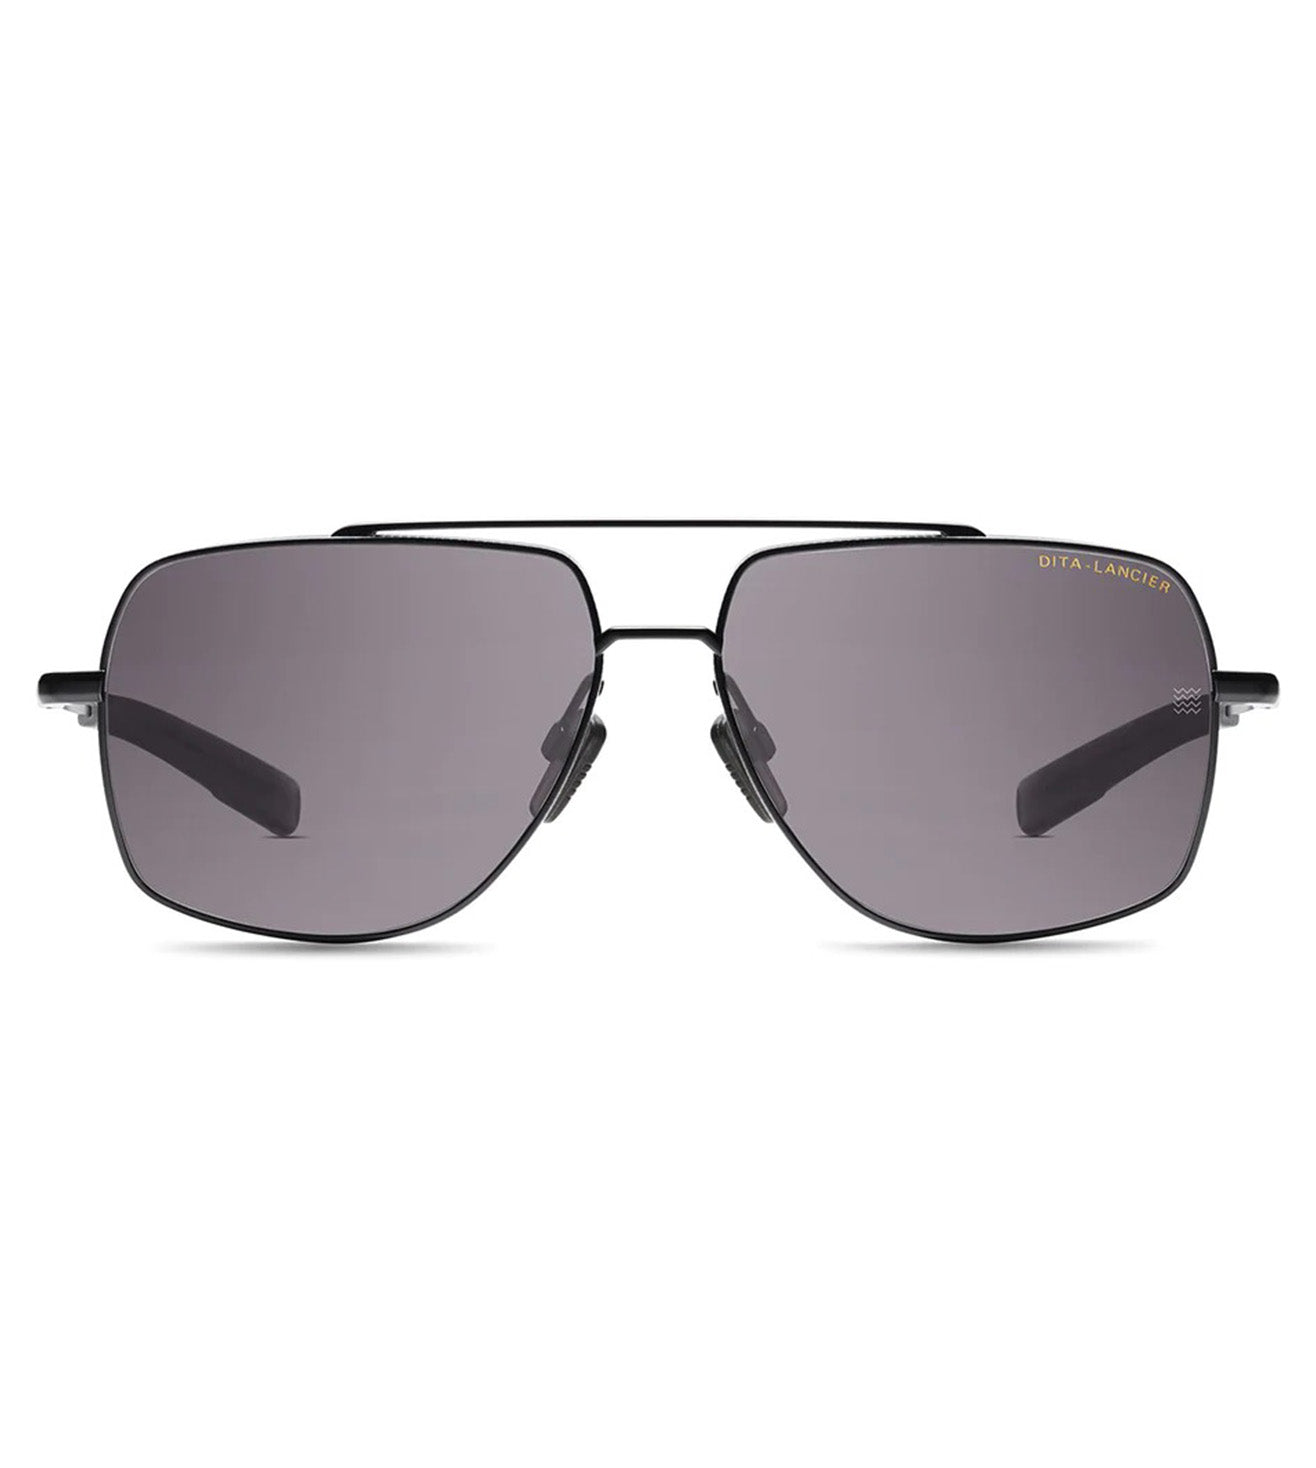 Dita LSA-107 Unisex Sea Grey Square Sunglasses